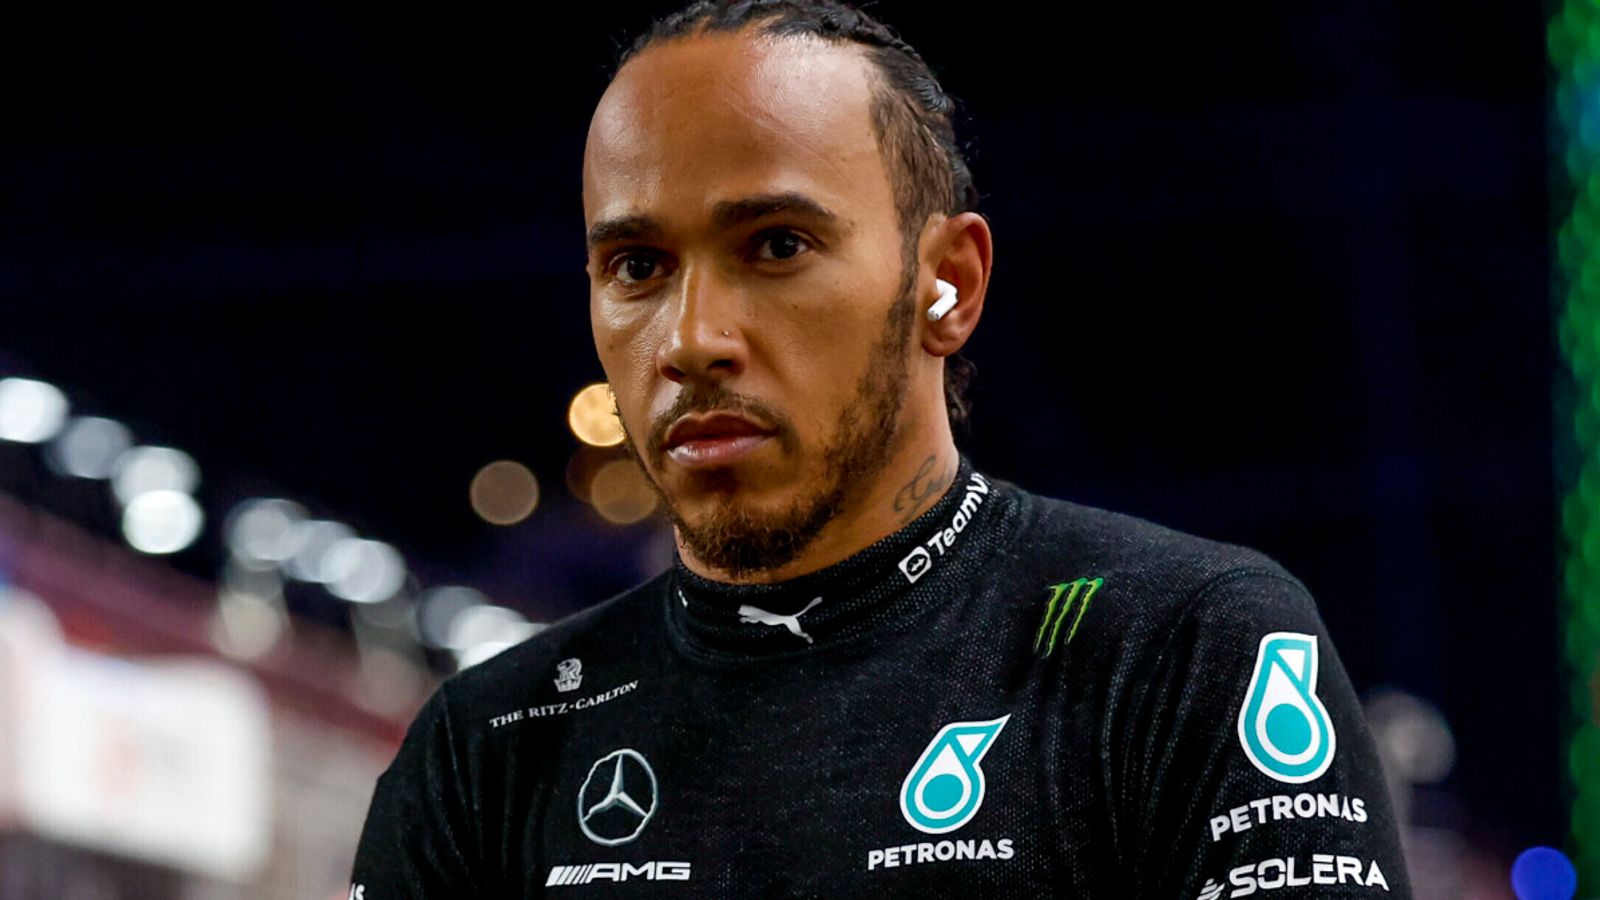 Lewis Hamilton: Diversity in Formula 1 about behind scenes | I felt like ‘lone ranger’